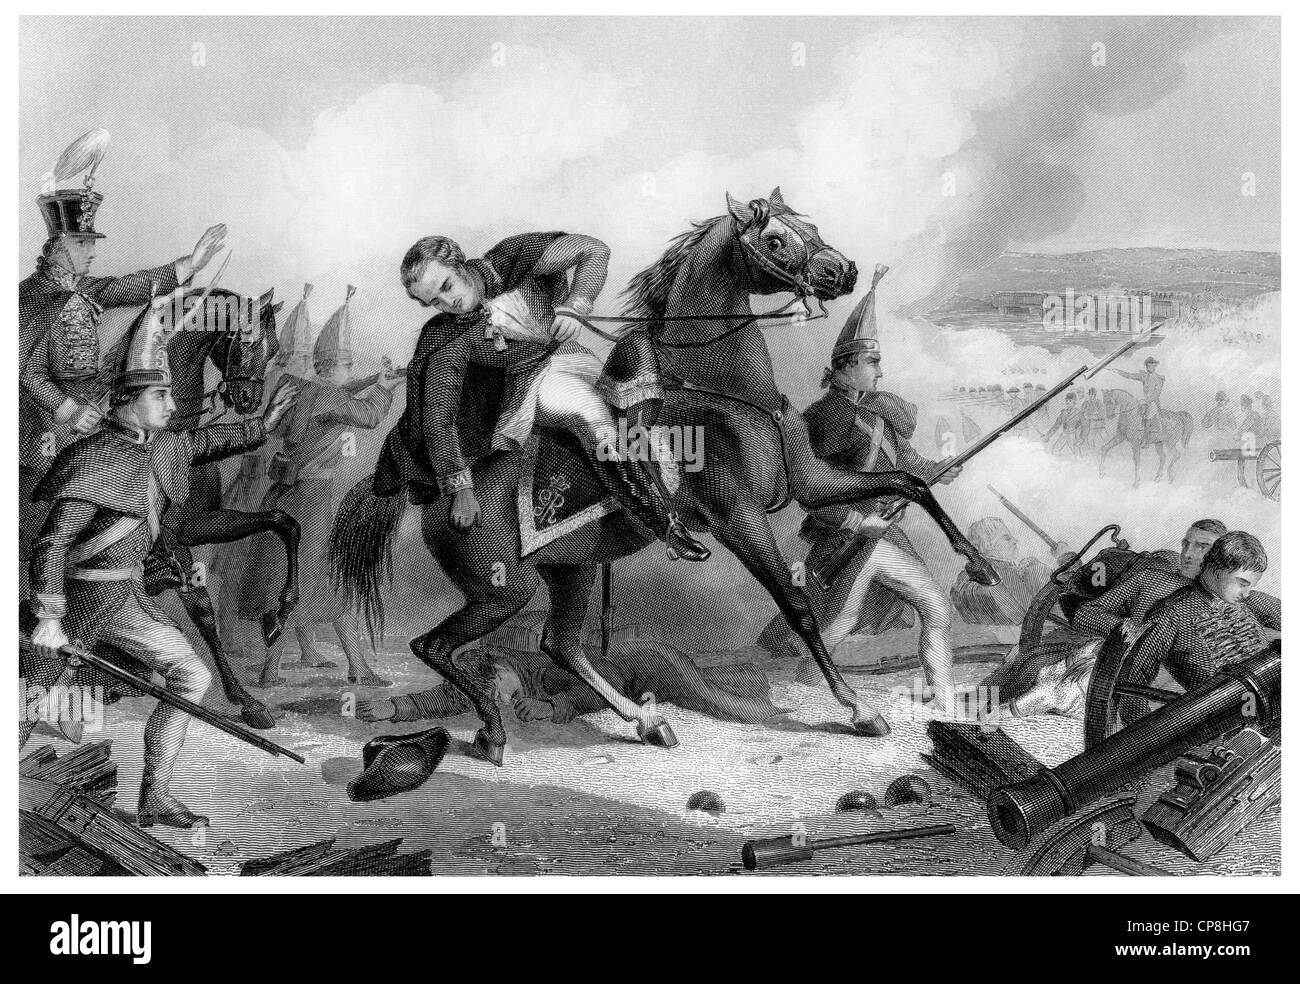 The Death of Colonel Rawle at the Battle of Trenton, 1776, American Revolutionary War, Hessian regiments under Colonel Johann Ra Stock Photo